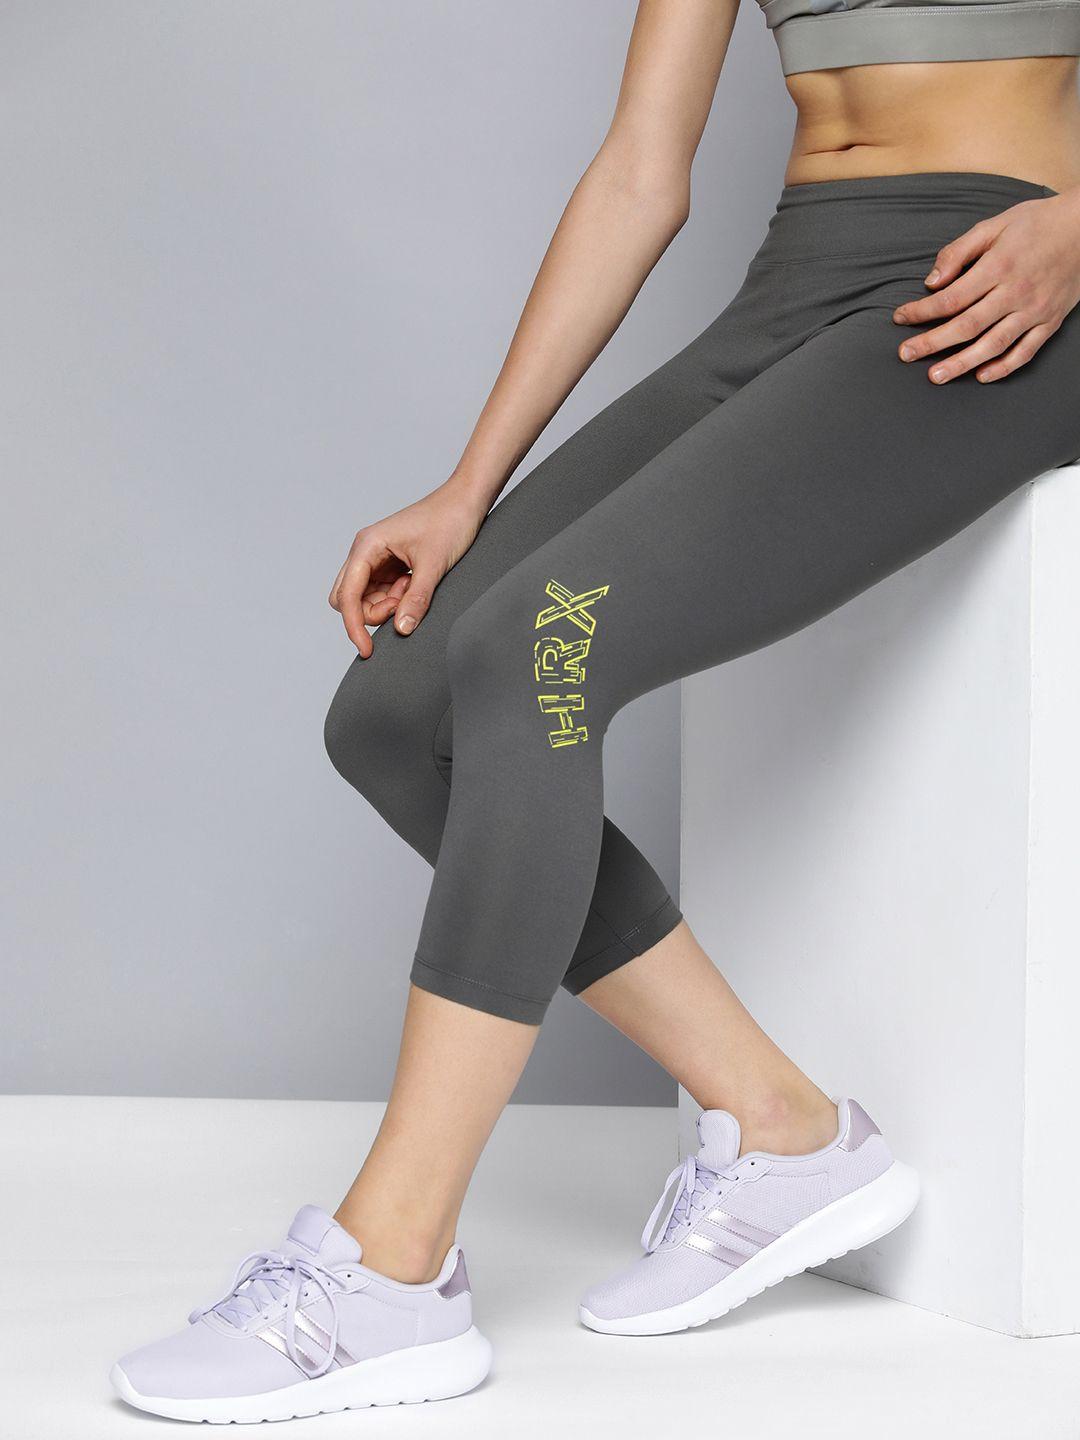 hrx by hrithik roshan printed rapid-dry skinny fit training tights